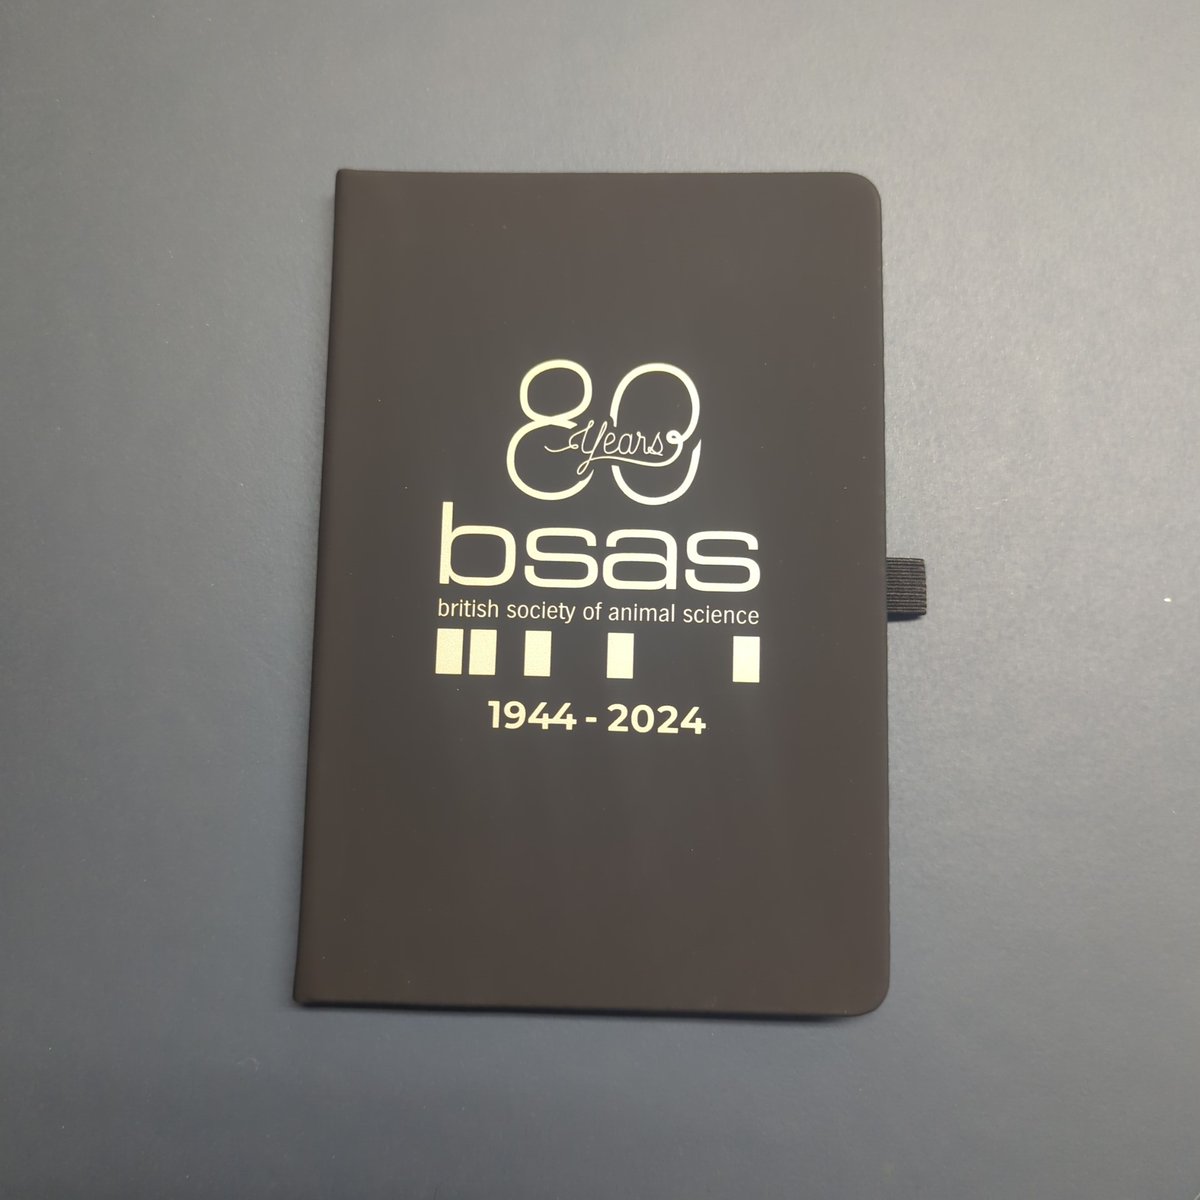 Also celebrating BSAS 80 years - 1944 to 2024. @BSAS_org  #BSAS2024